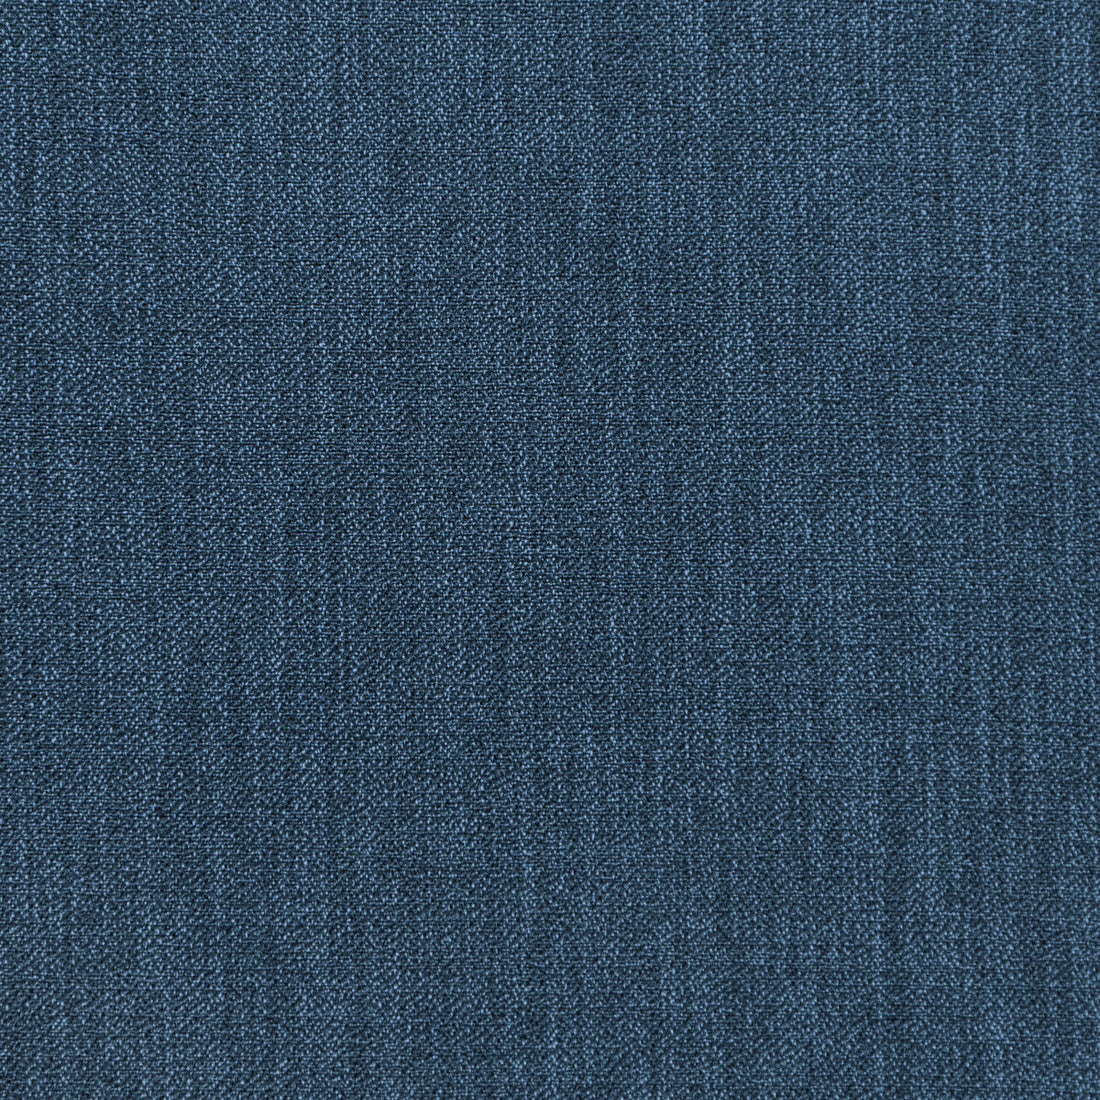 Kravet Smart fabric in 35942-5 color - pattern 35942.5.0 - by Kravet Smart in the Performance Kravetarmor collection